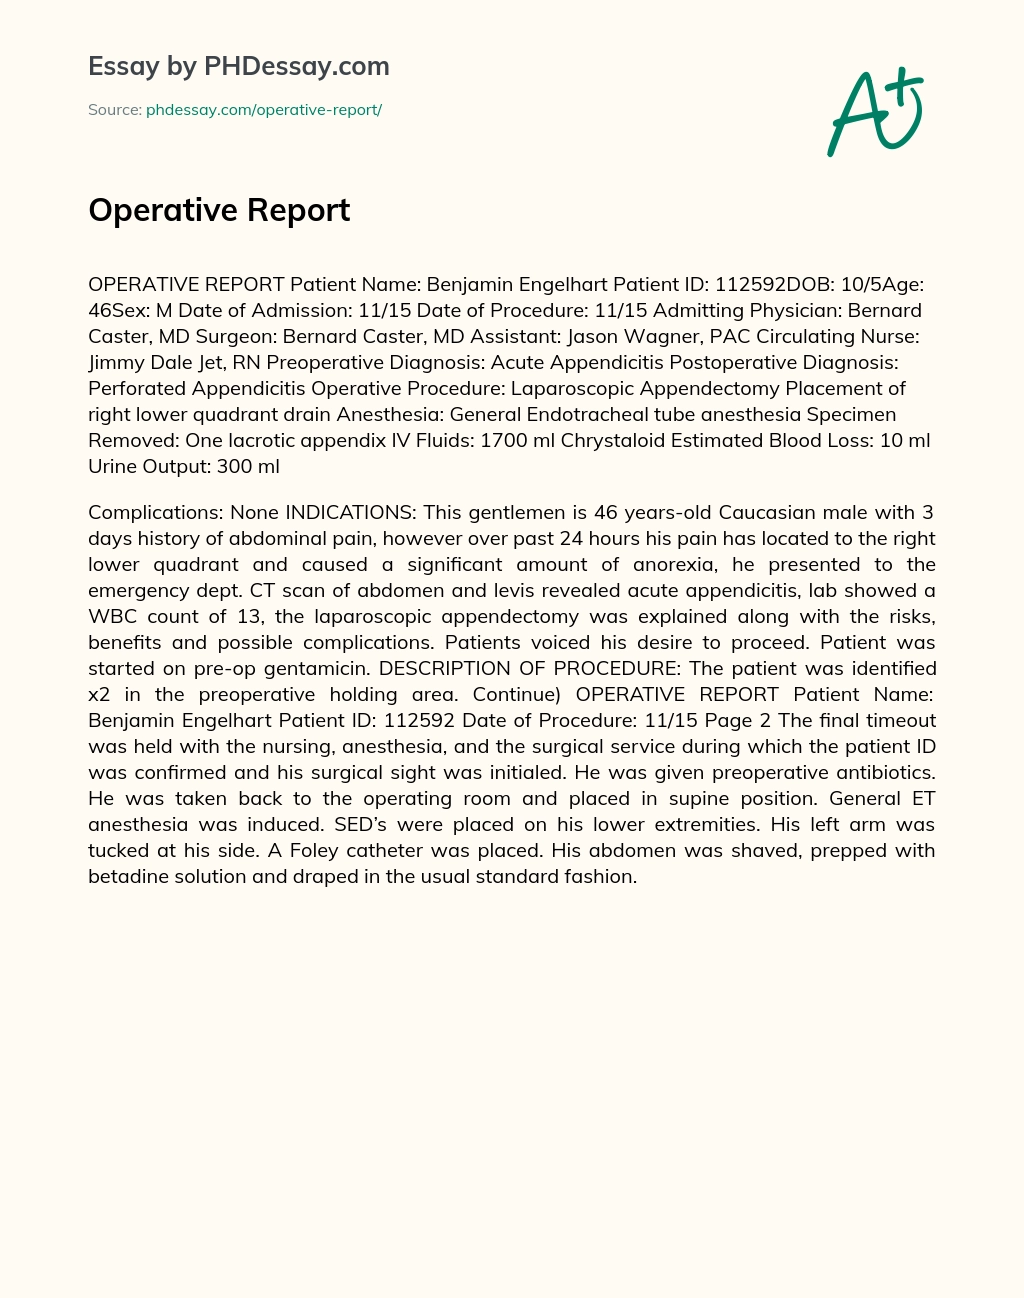 Operative Report essay